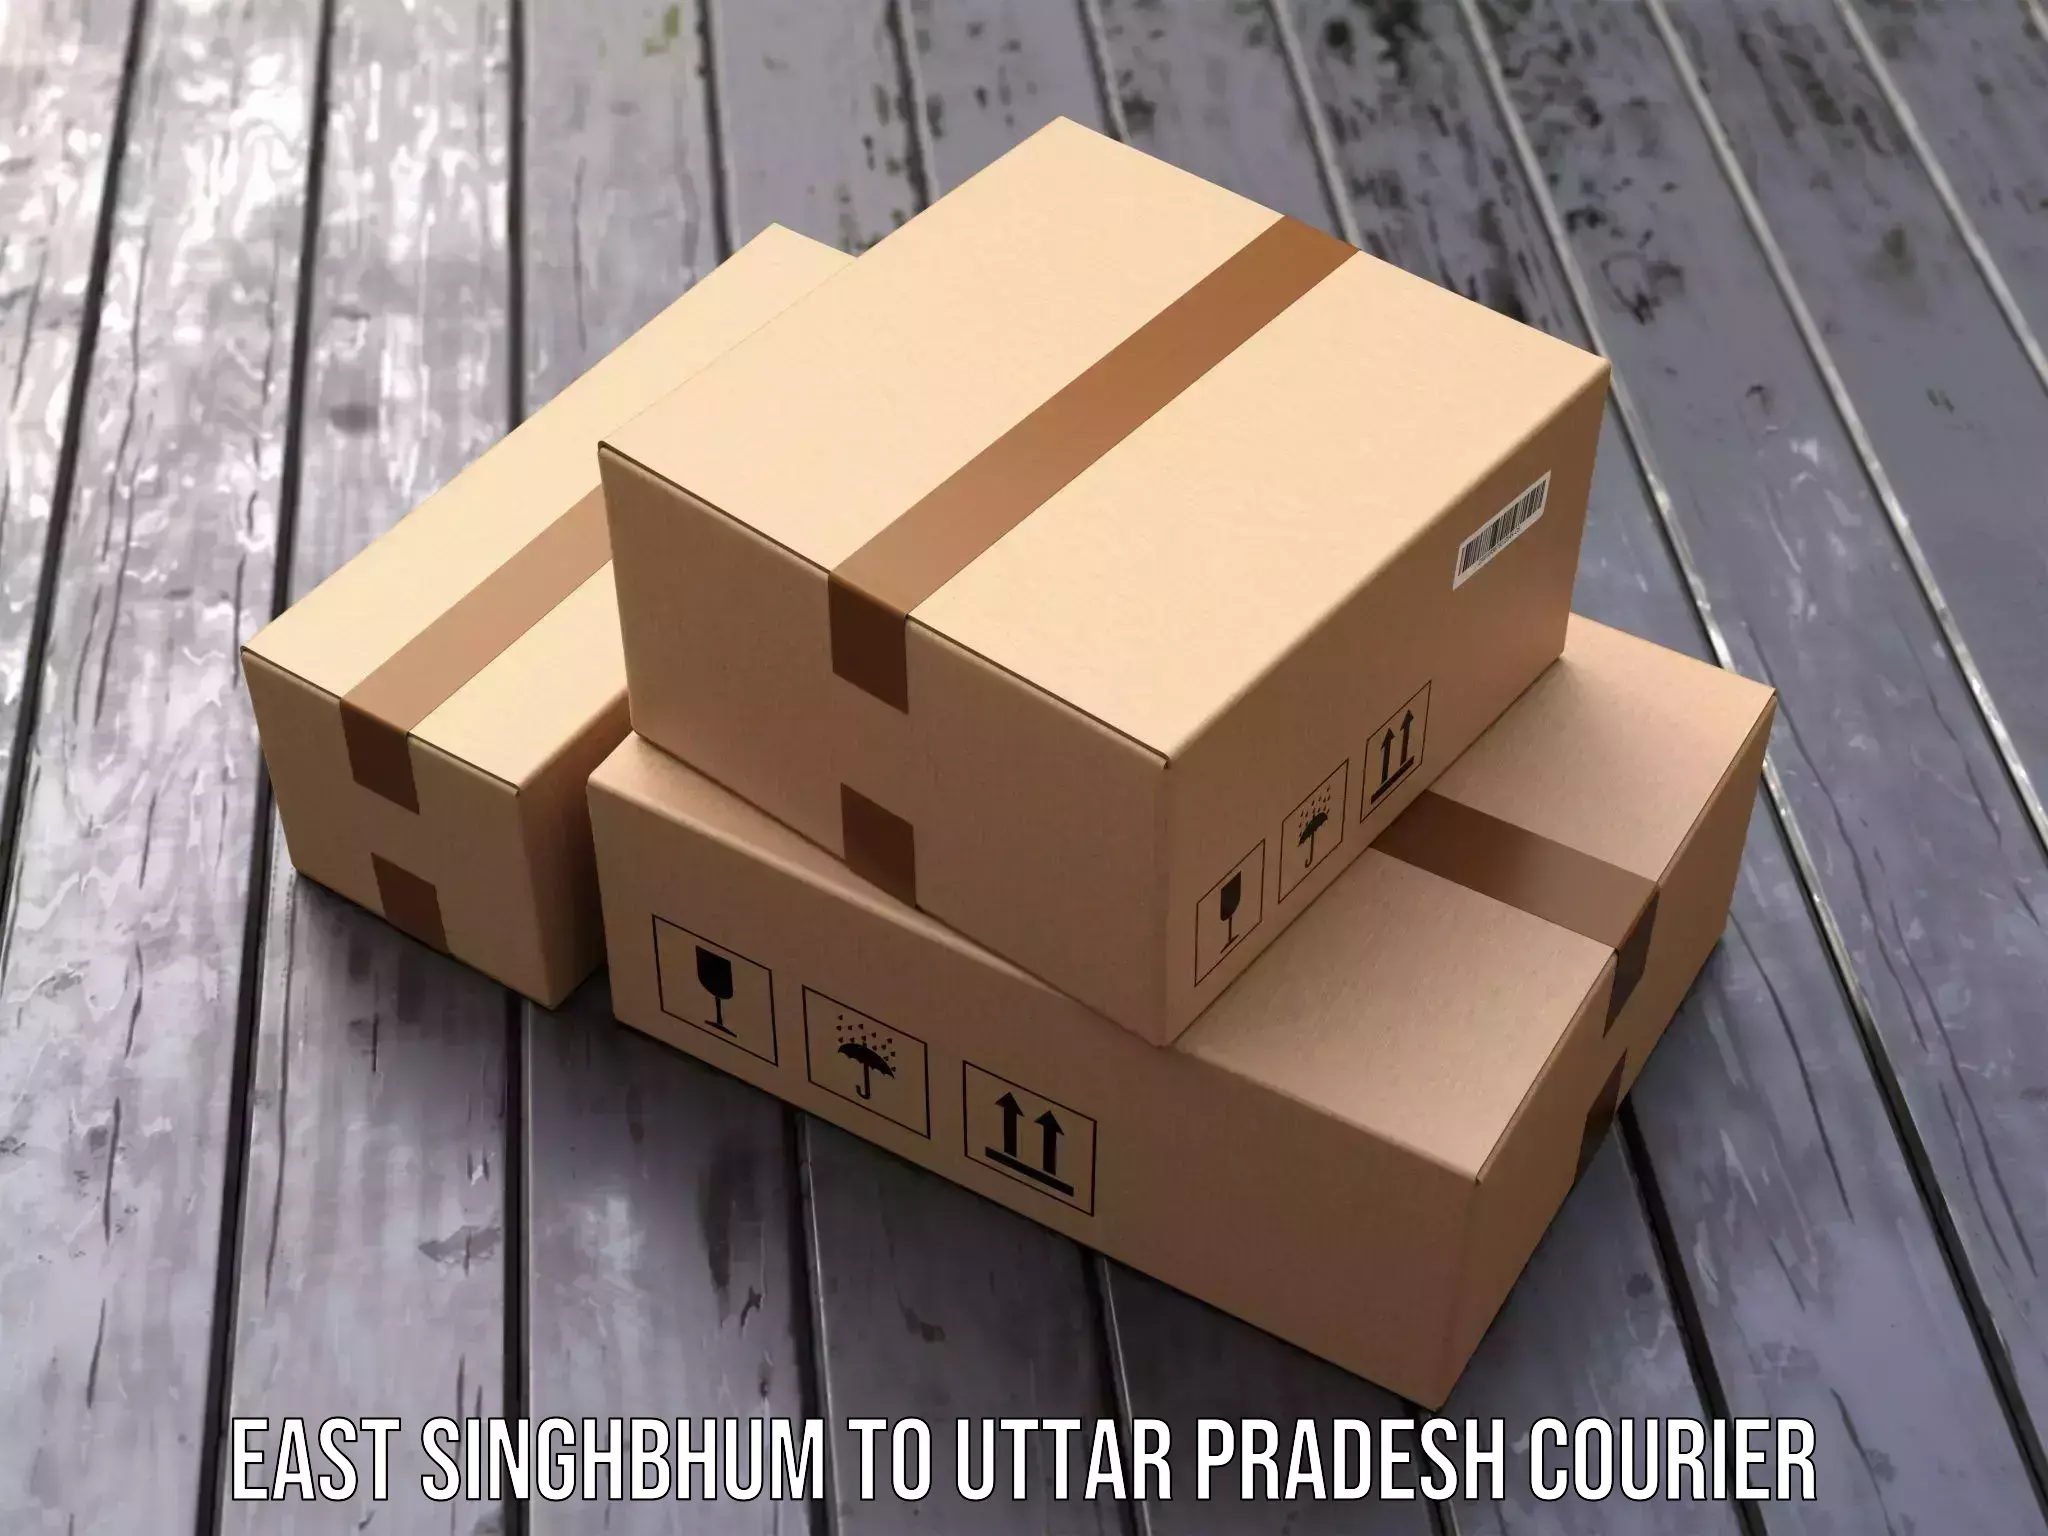 Online shipping calculator East Singhbhum to Meerut